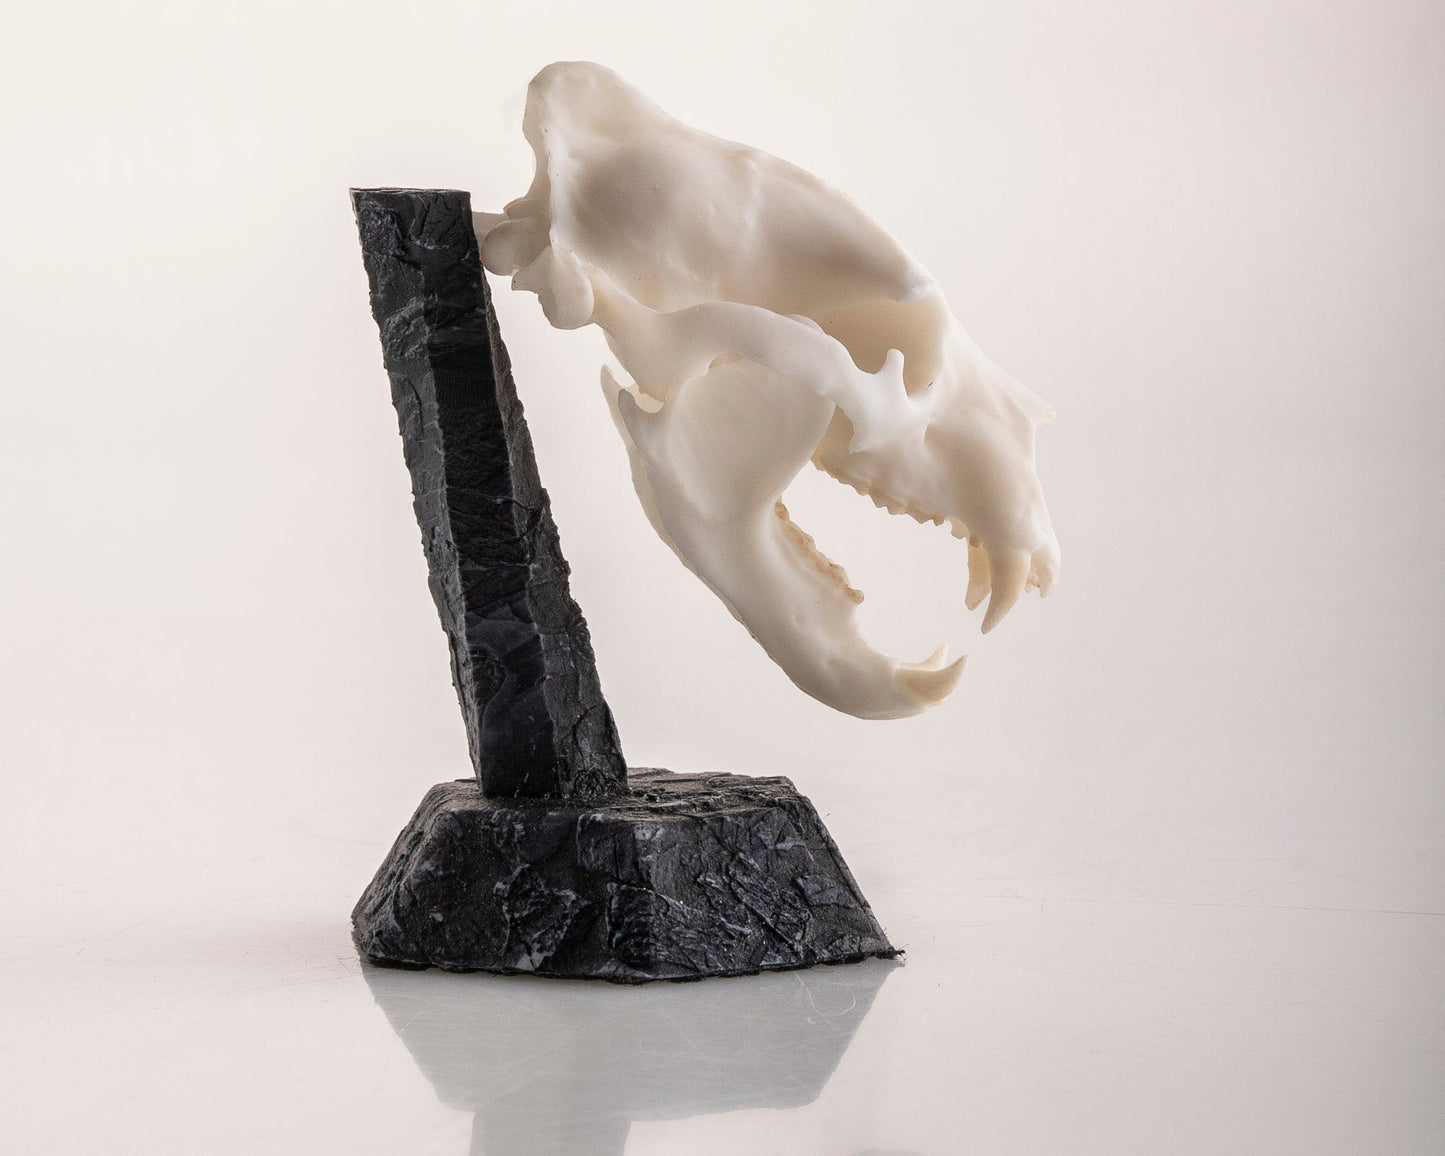 Resin Skullies - Miniature Replica Lion Skull